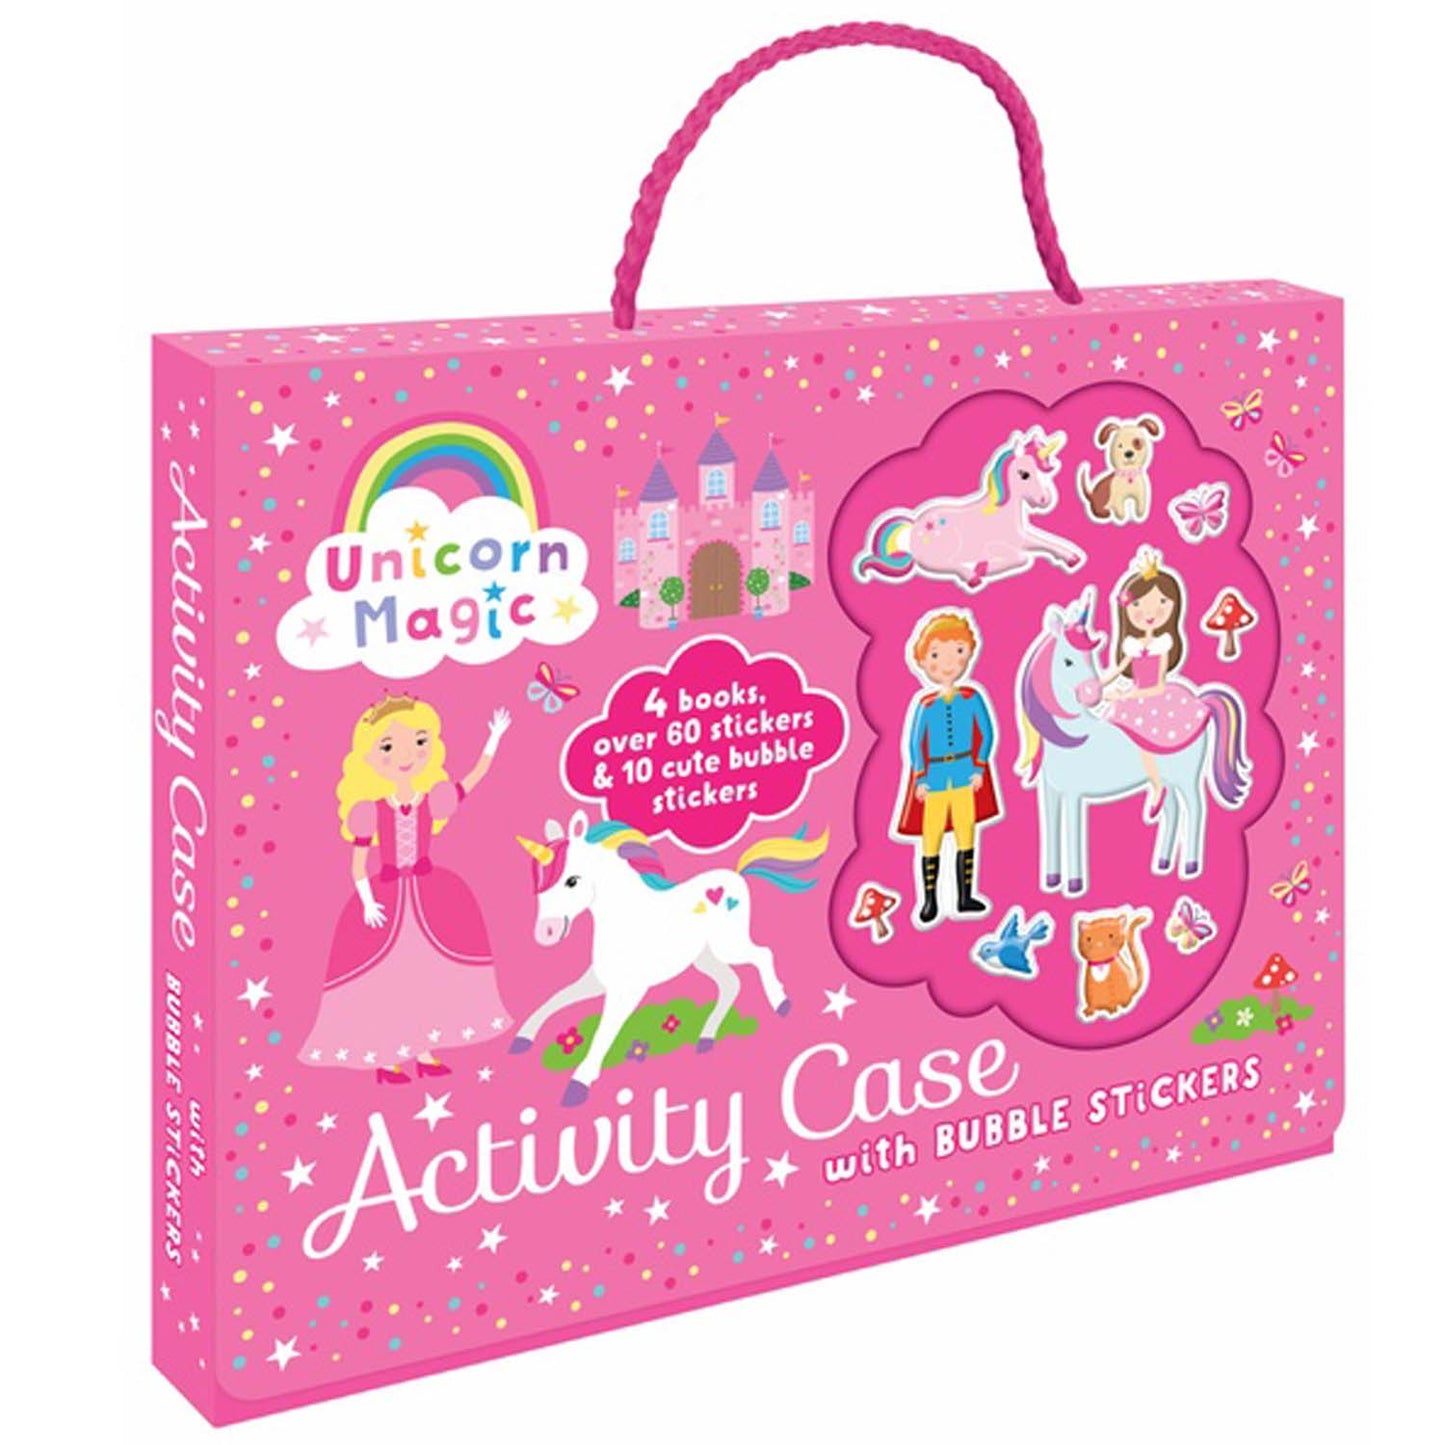 Unicorn Magic Activity Case | Bubble Stickers | Activity Books for kids